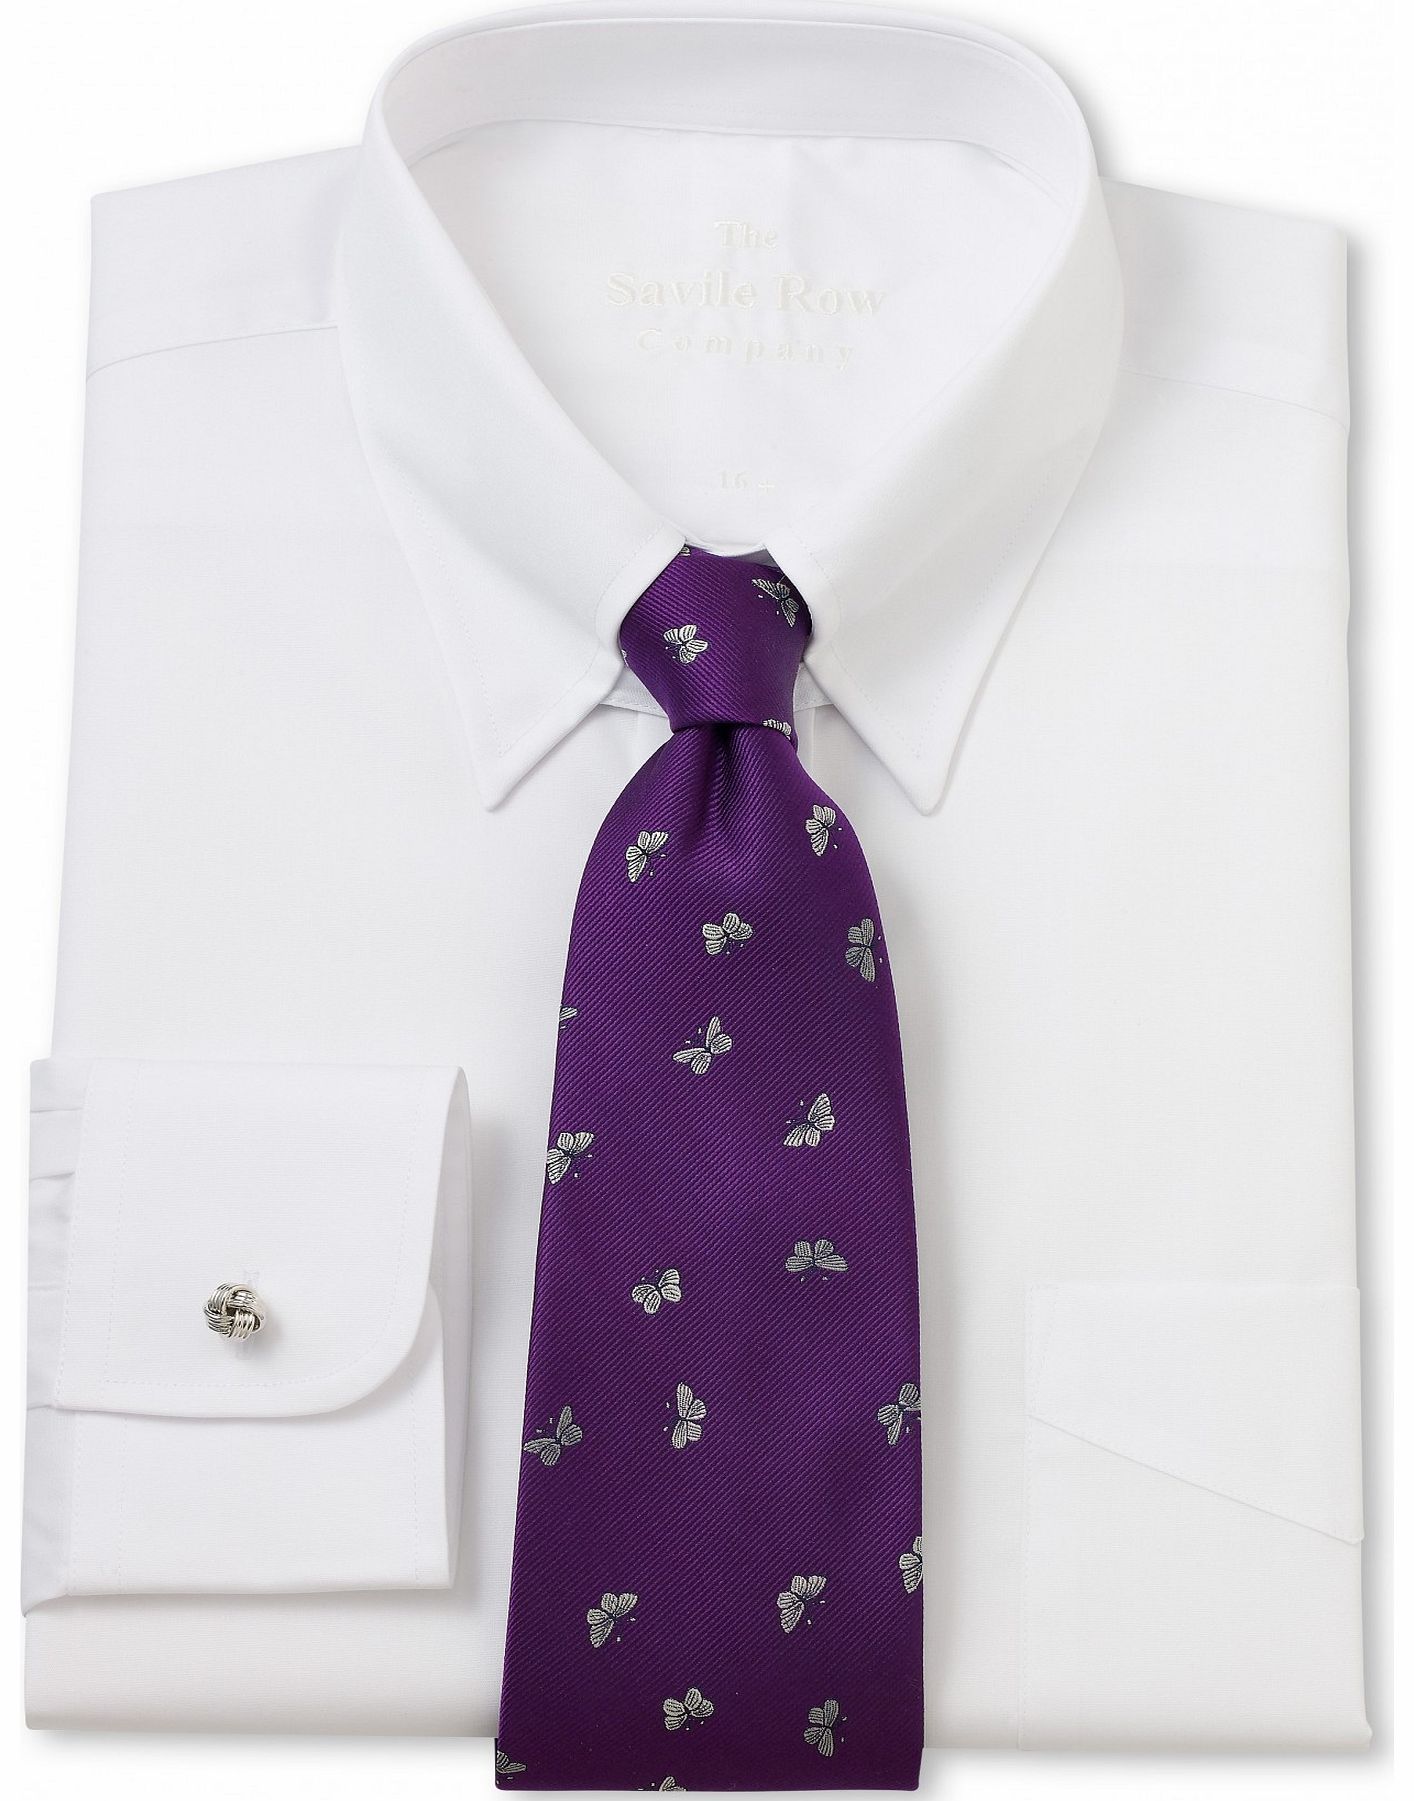 Savile Row Company White Poplin Tab Collar Classic Fit Shirt 17``